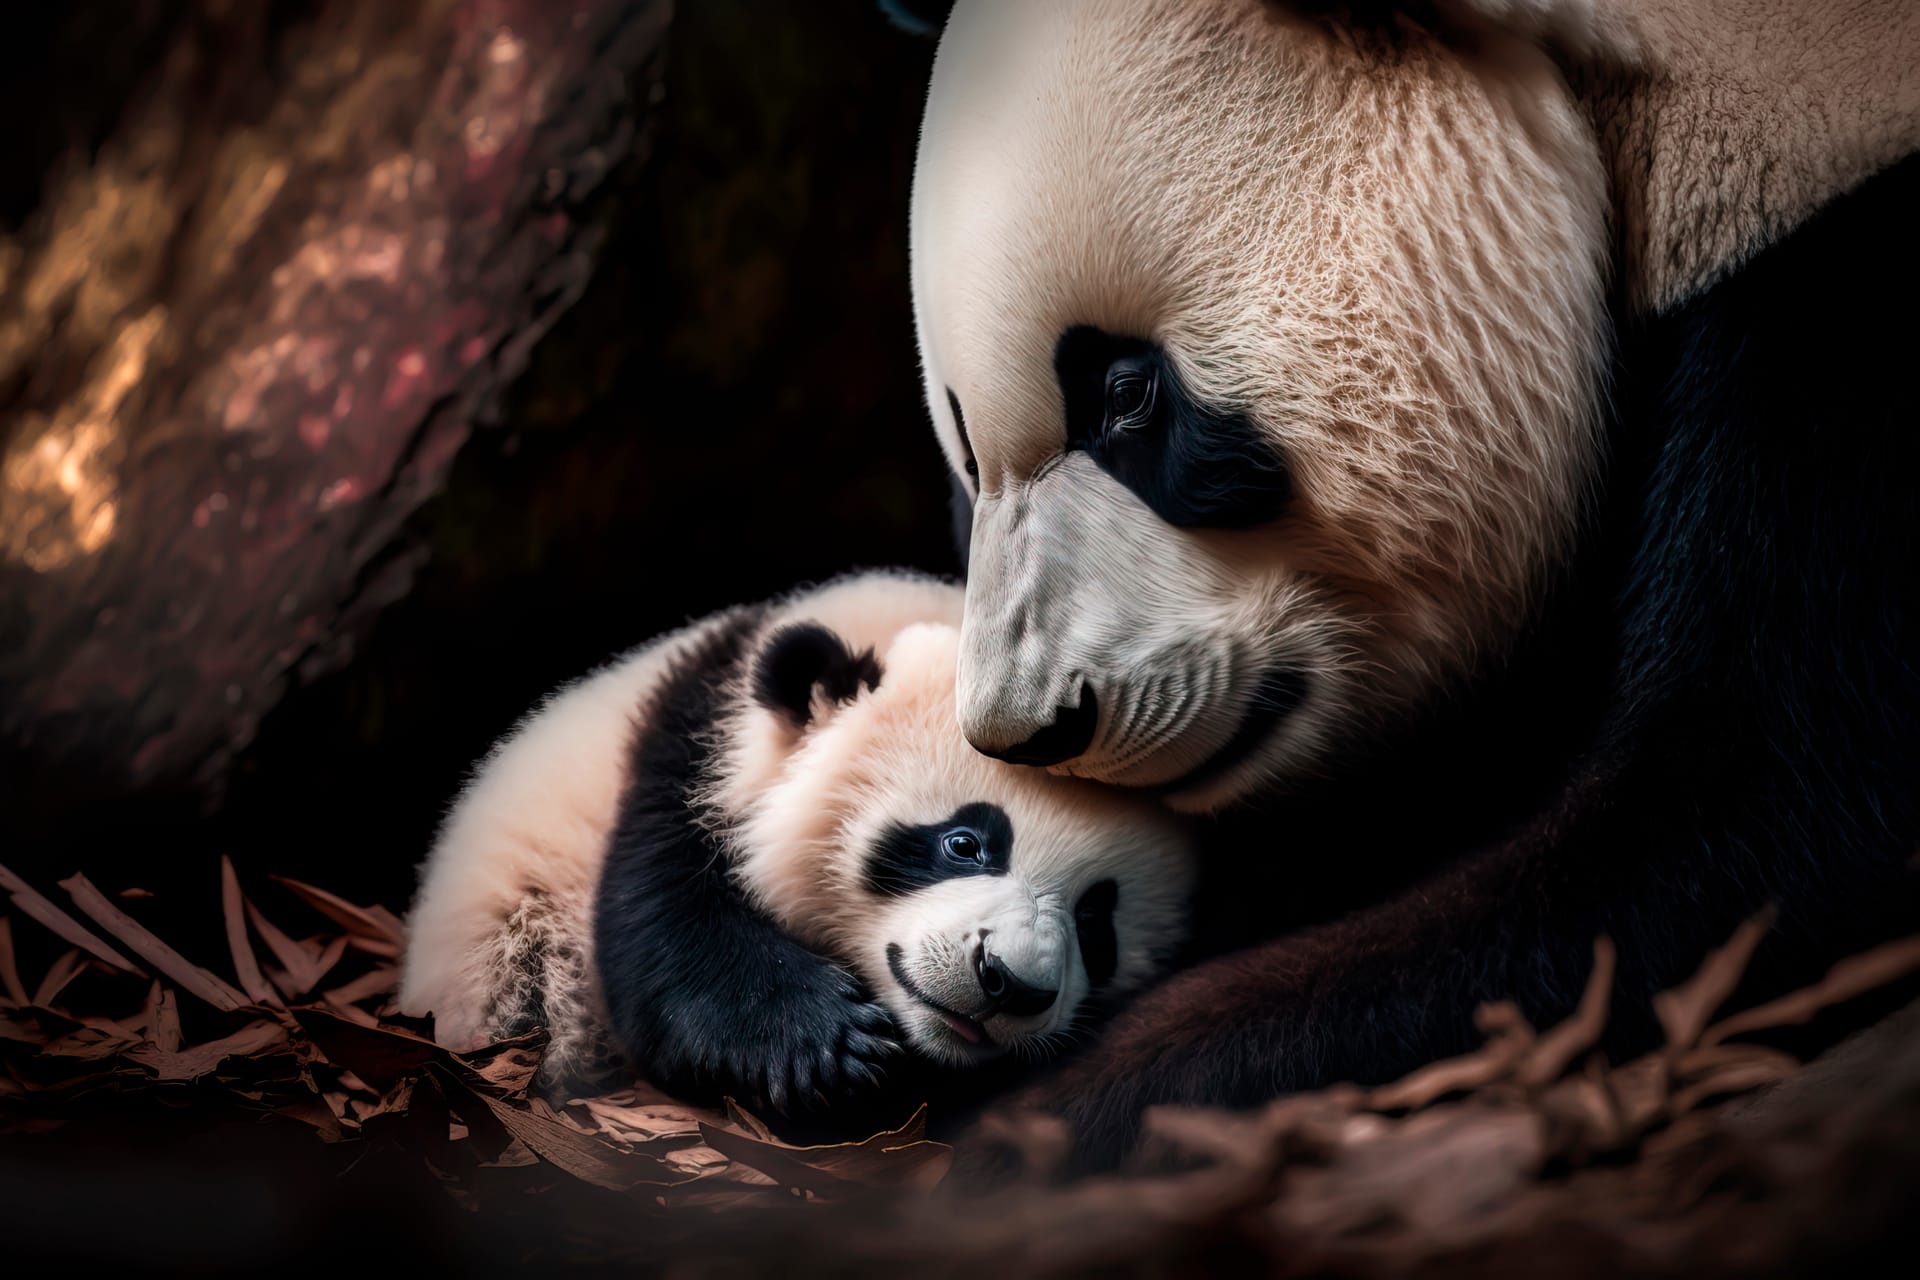 Baby panda happy together chinese park realistic digital illustration image